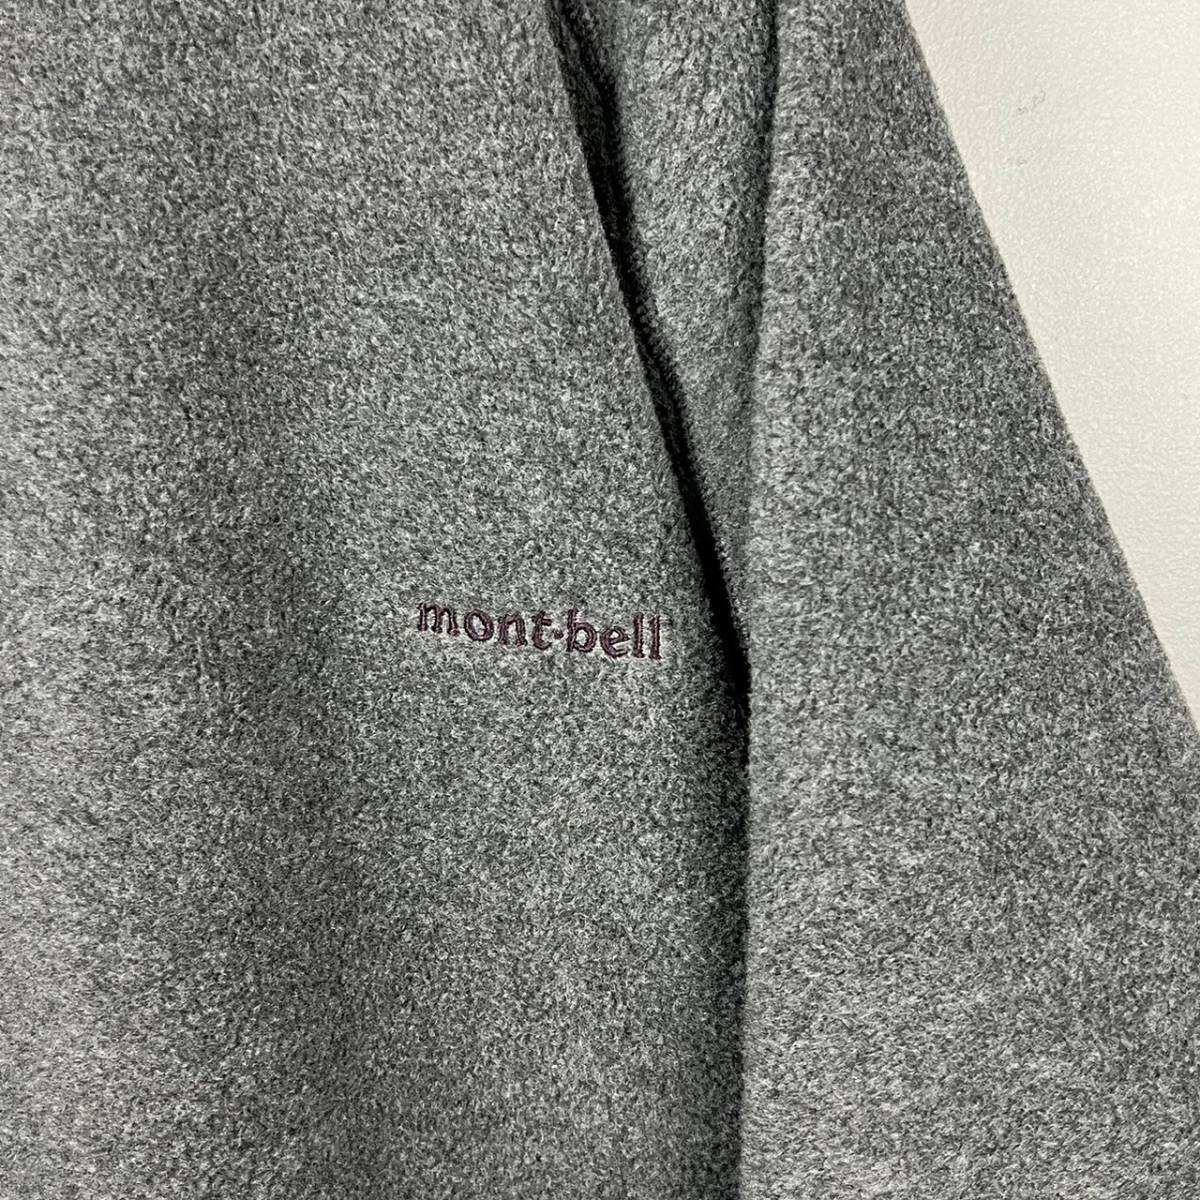 Wl706 正規品 美品 mont-bell モンベル クリマプラス ライトスウェット プルオーバー フリース ジャケット 刺繍 グレー 灰 メンズ L_画像6